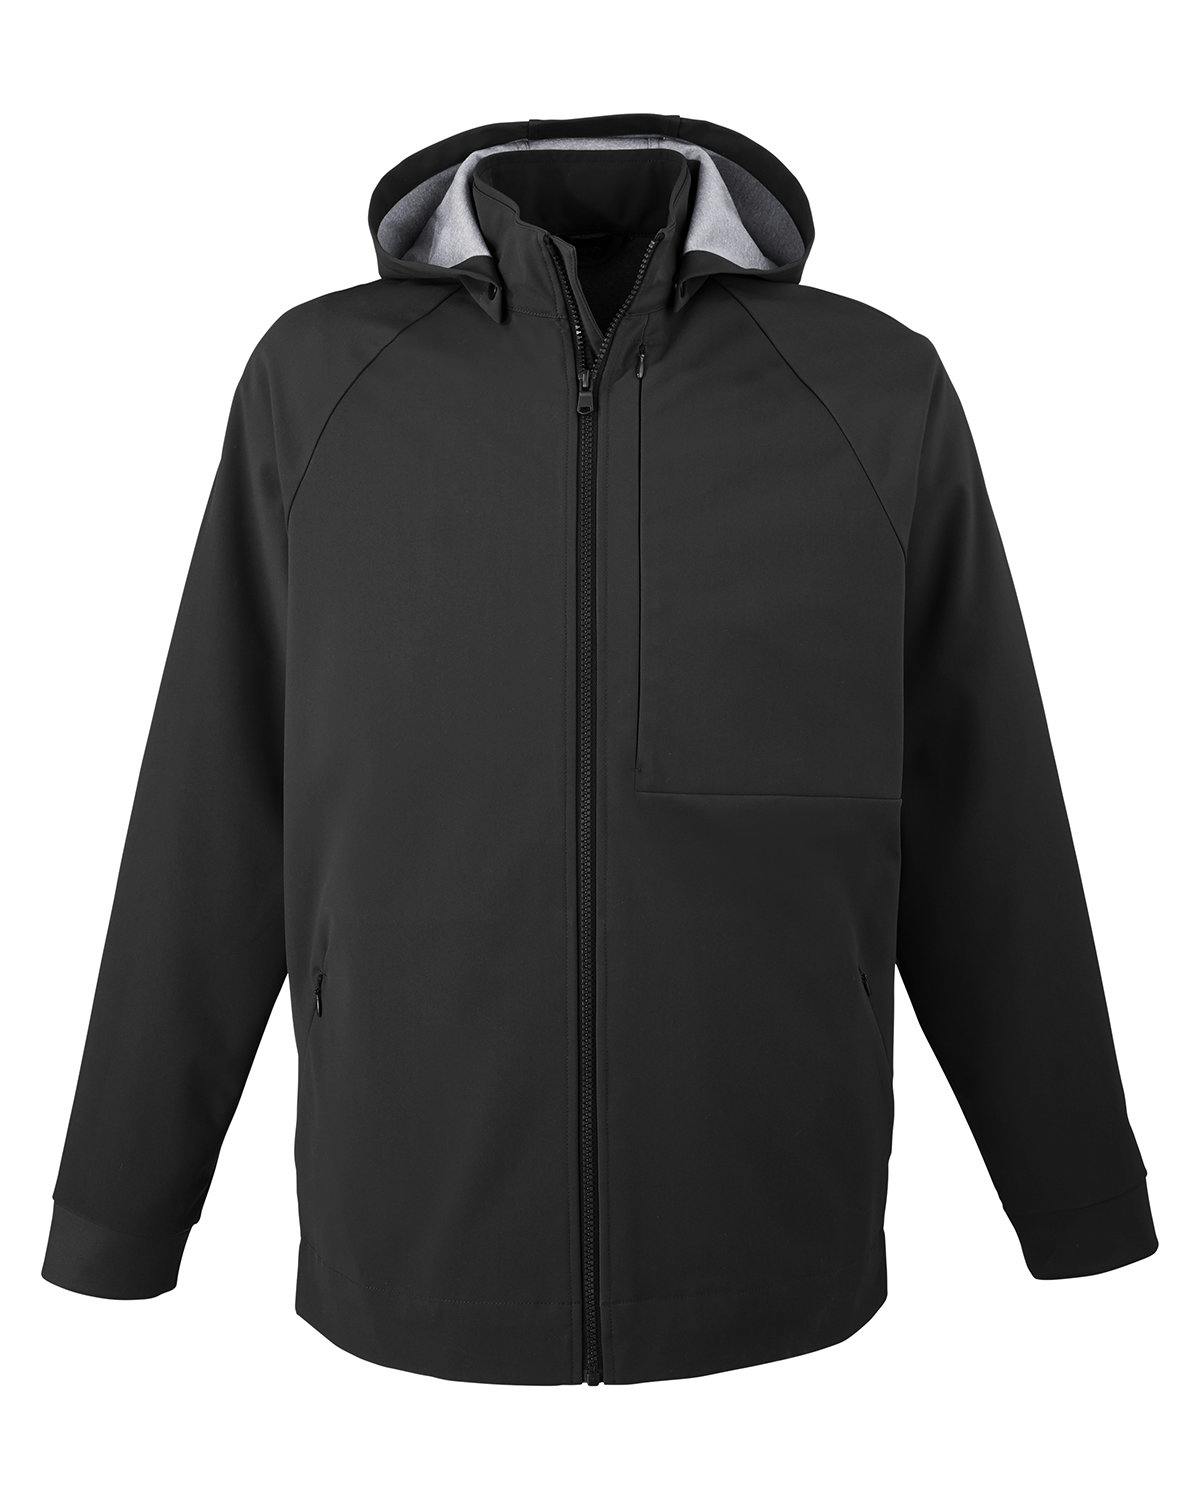 Image for Men's City Hybrid Soft Shell Hooded Jacket